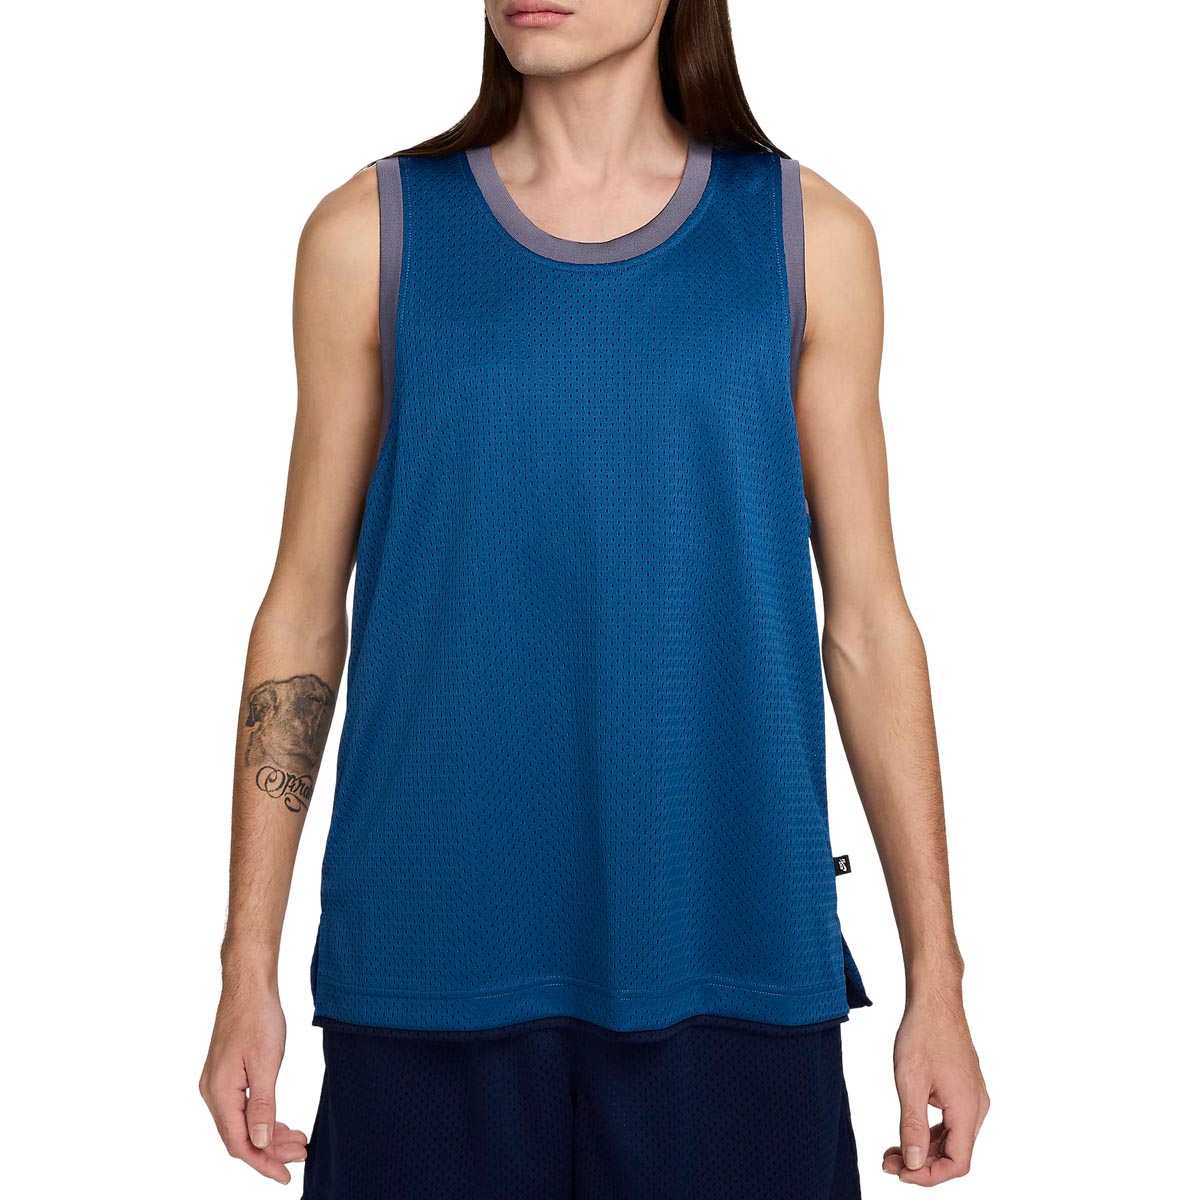 Nike SB Basketball Skate Jersey - Midnight Navy/Court Blue image 4